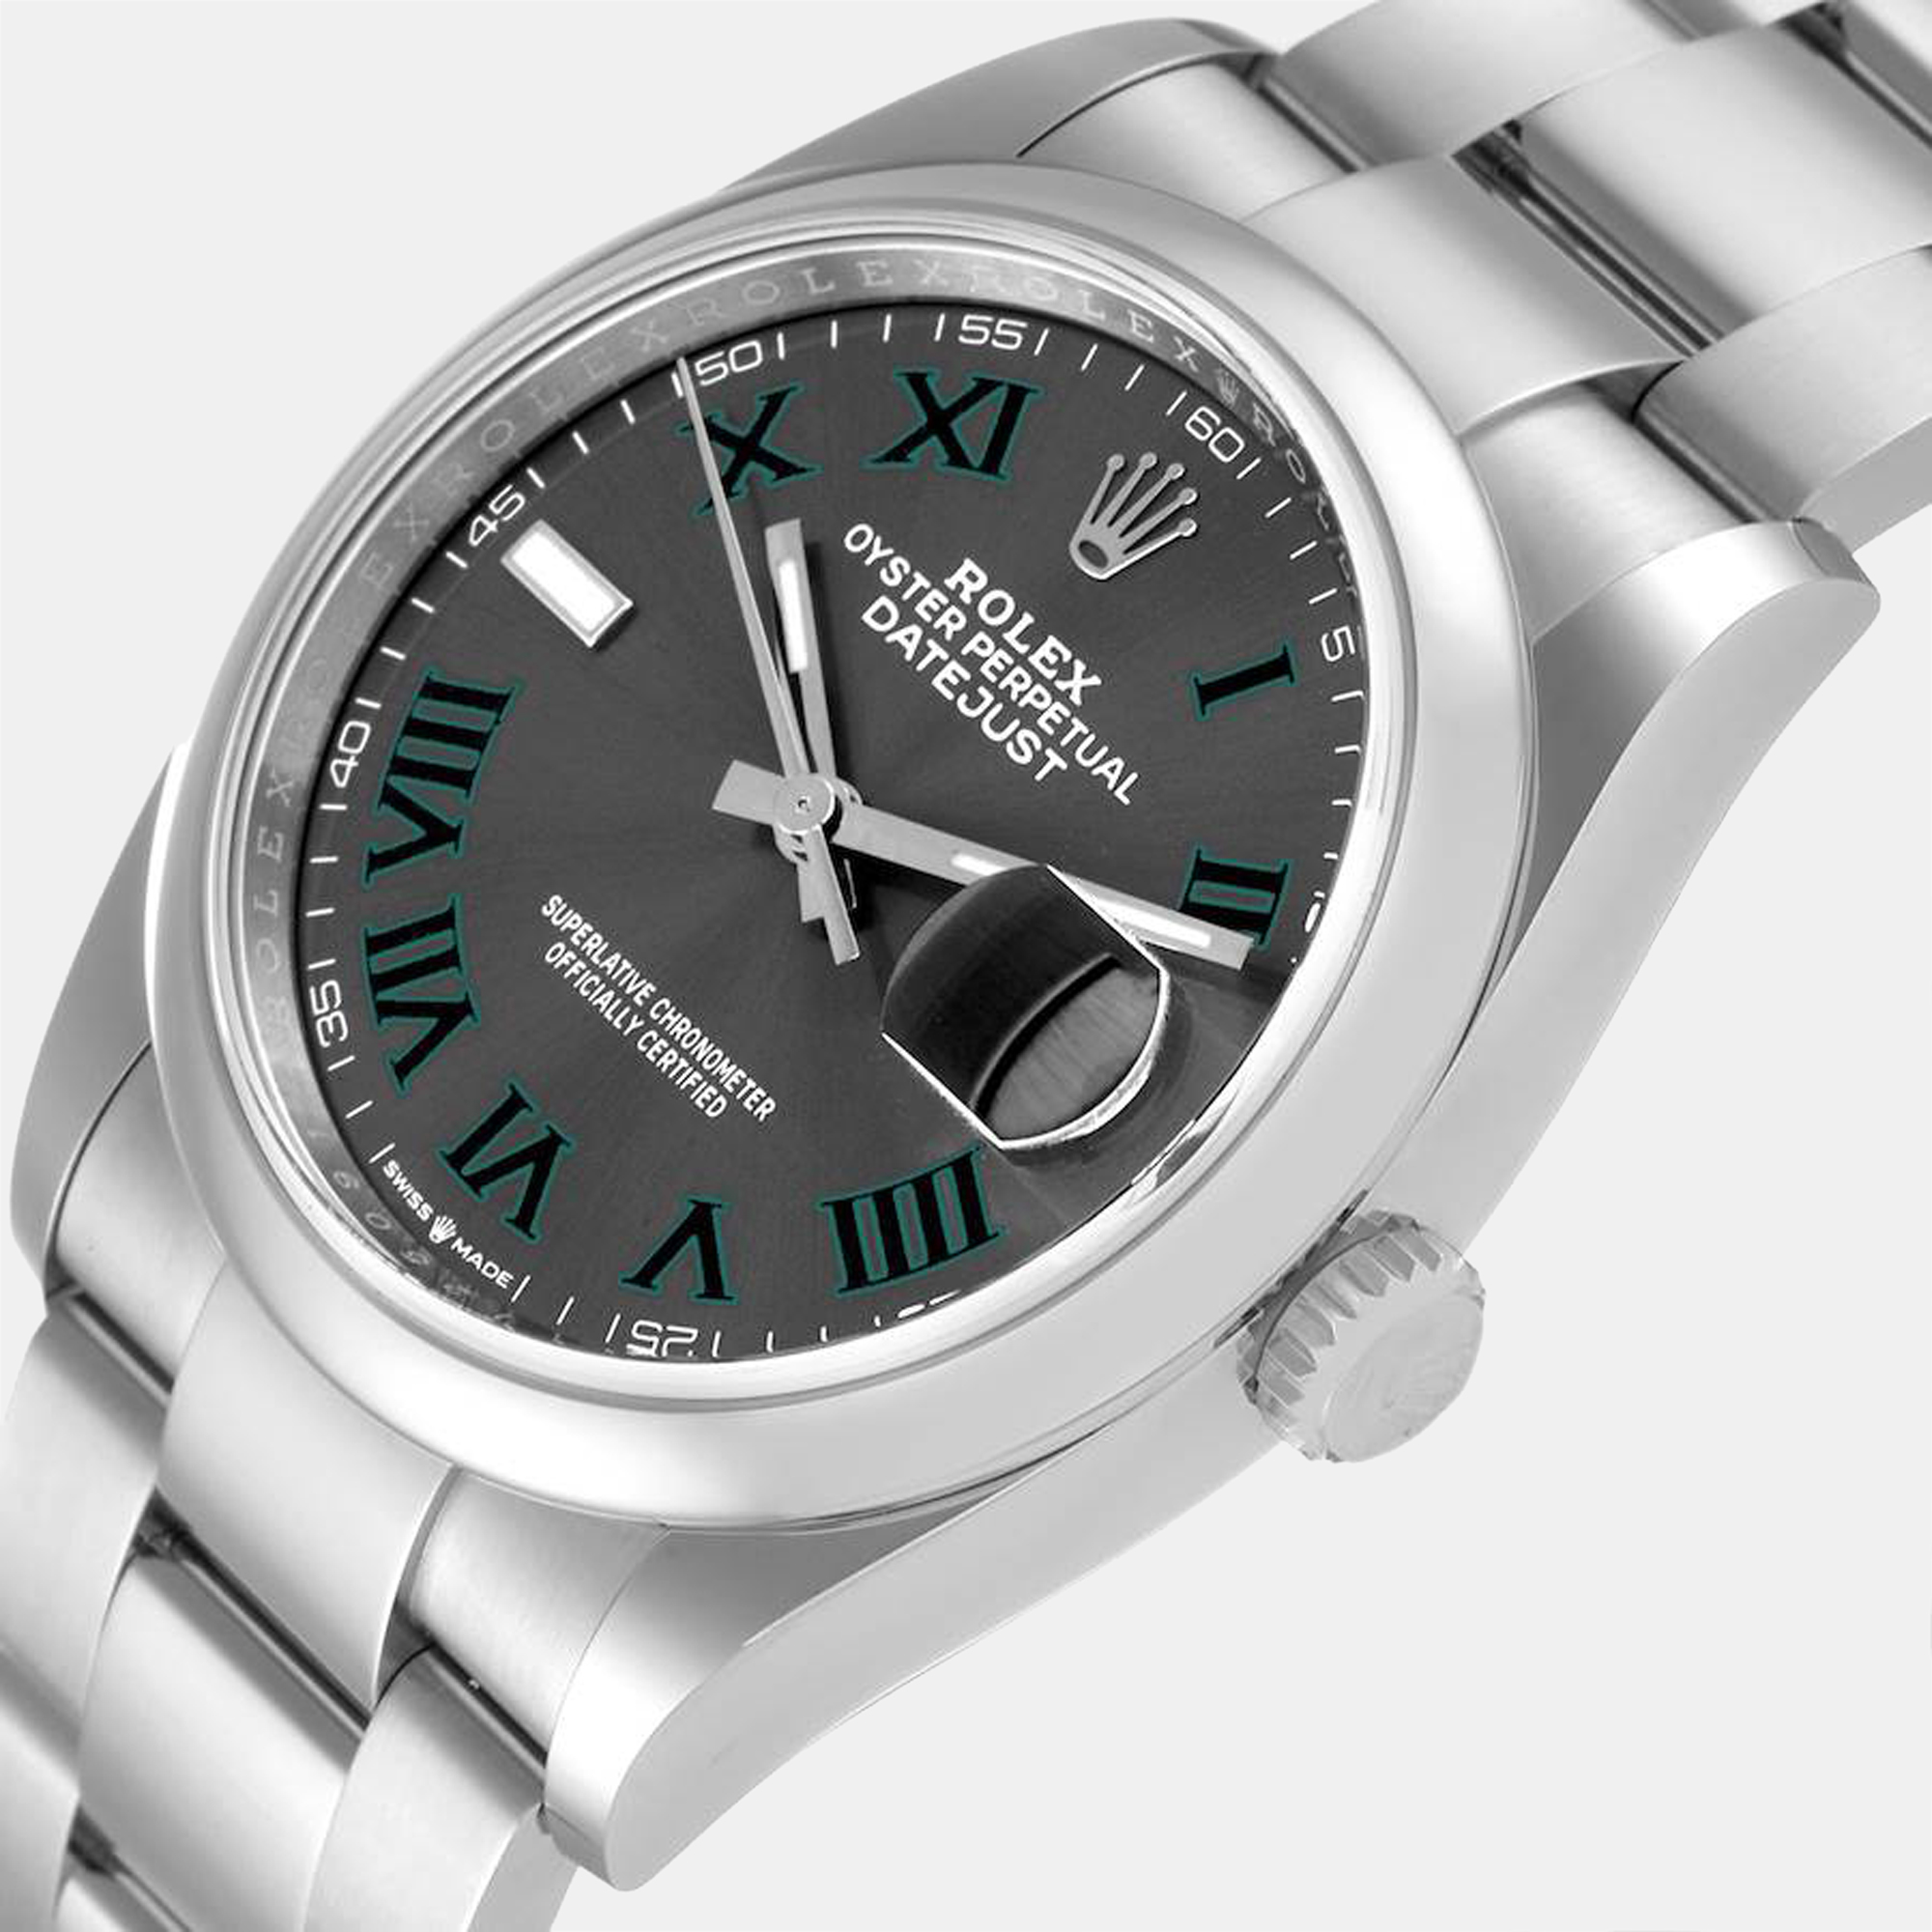 

Rolex Grey Stainless Steel Datejust Wimbledon 126200 Automatic Men's Wristwatch 36 mm